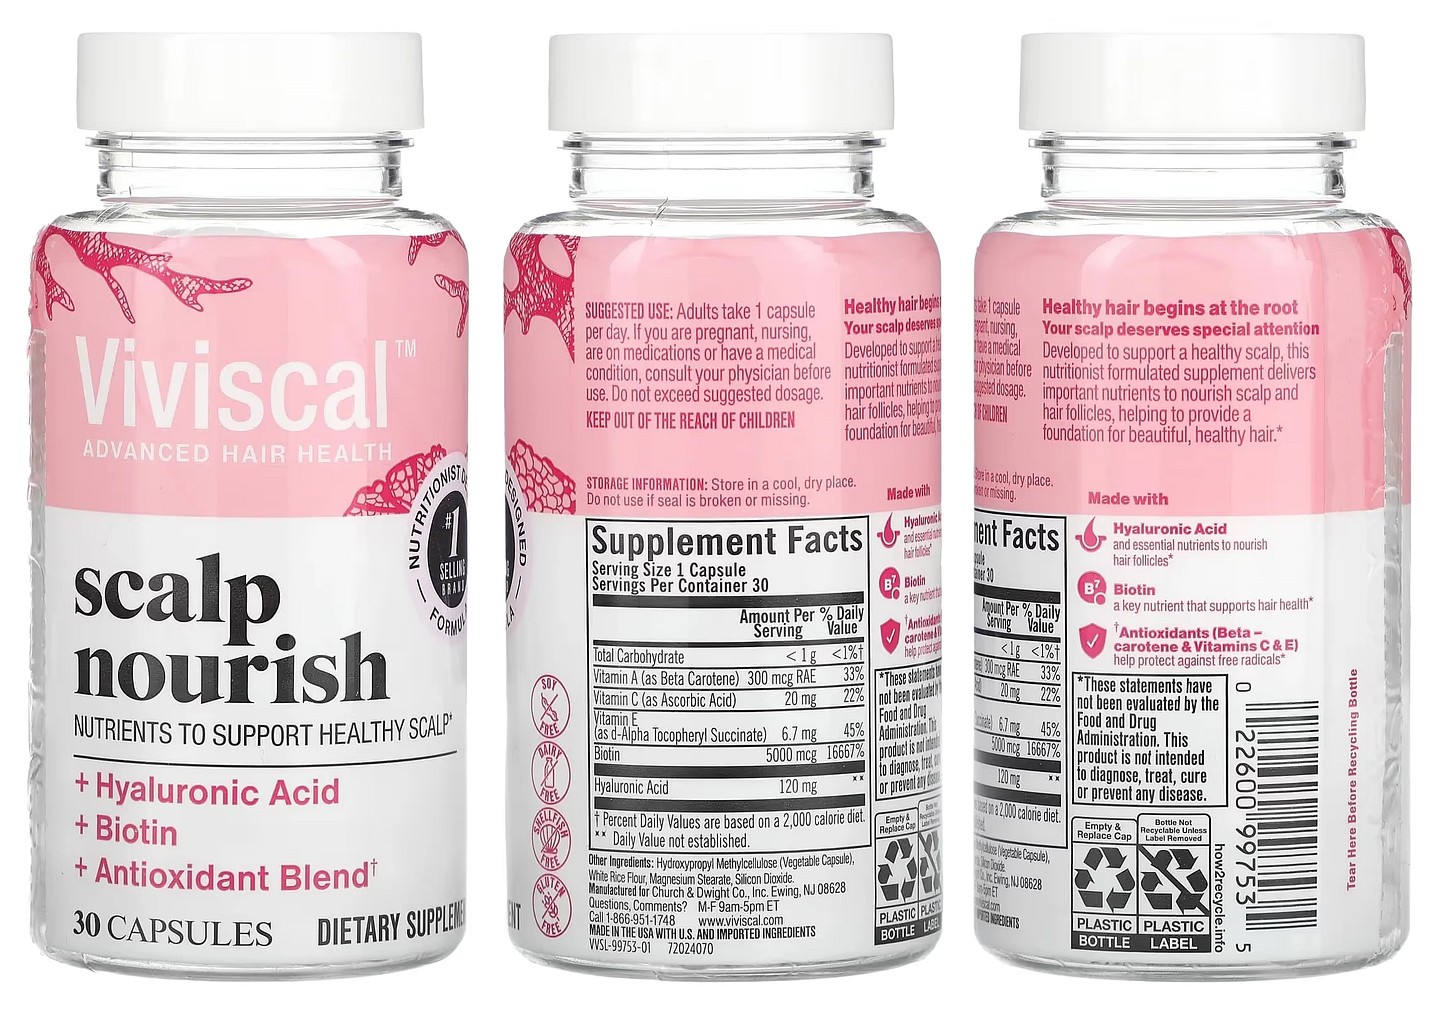 Viviscal, Scalp Nourish packaging